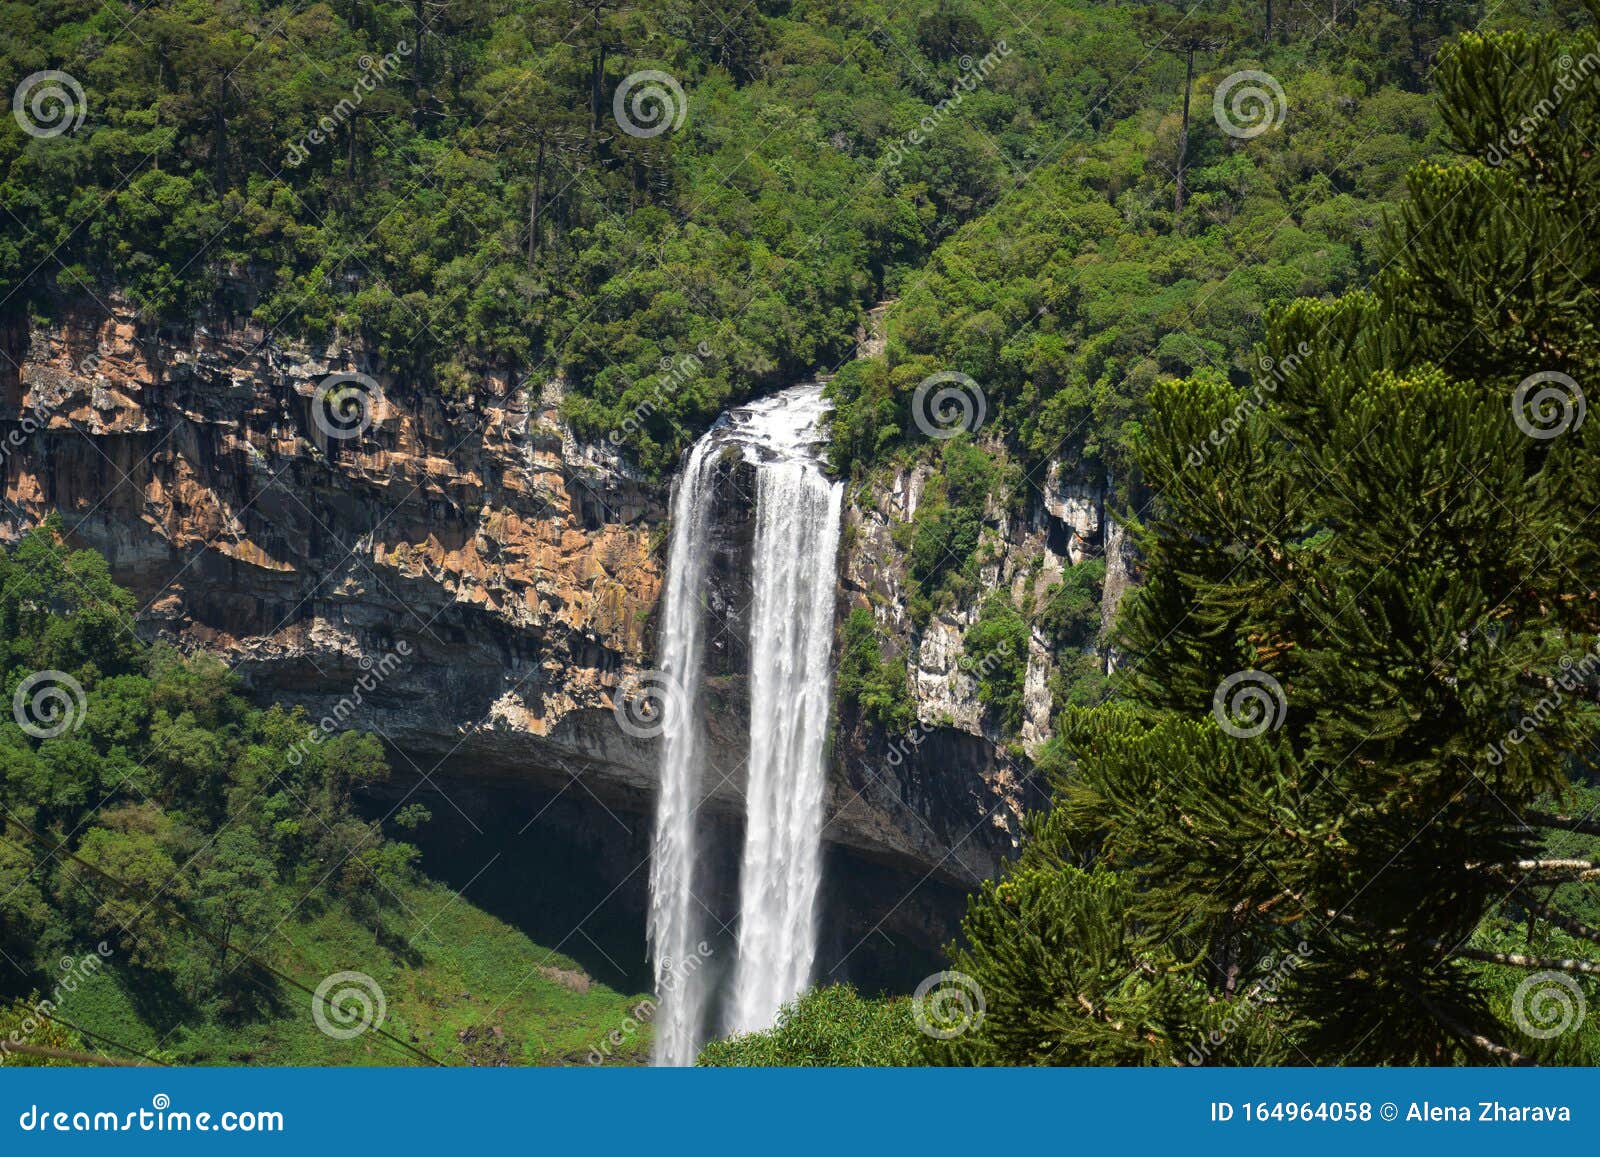 view of caracol waterfall  `cascata do caracol`  - canela city, rio grande do sul